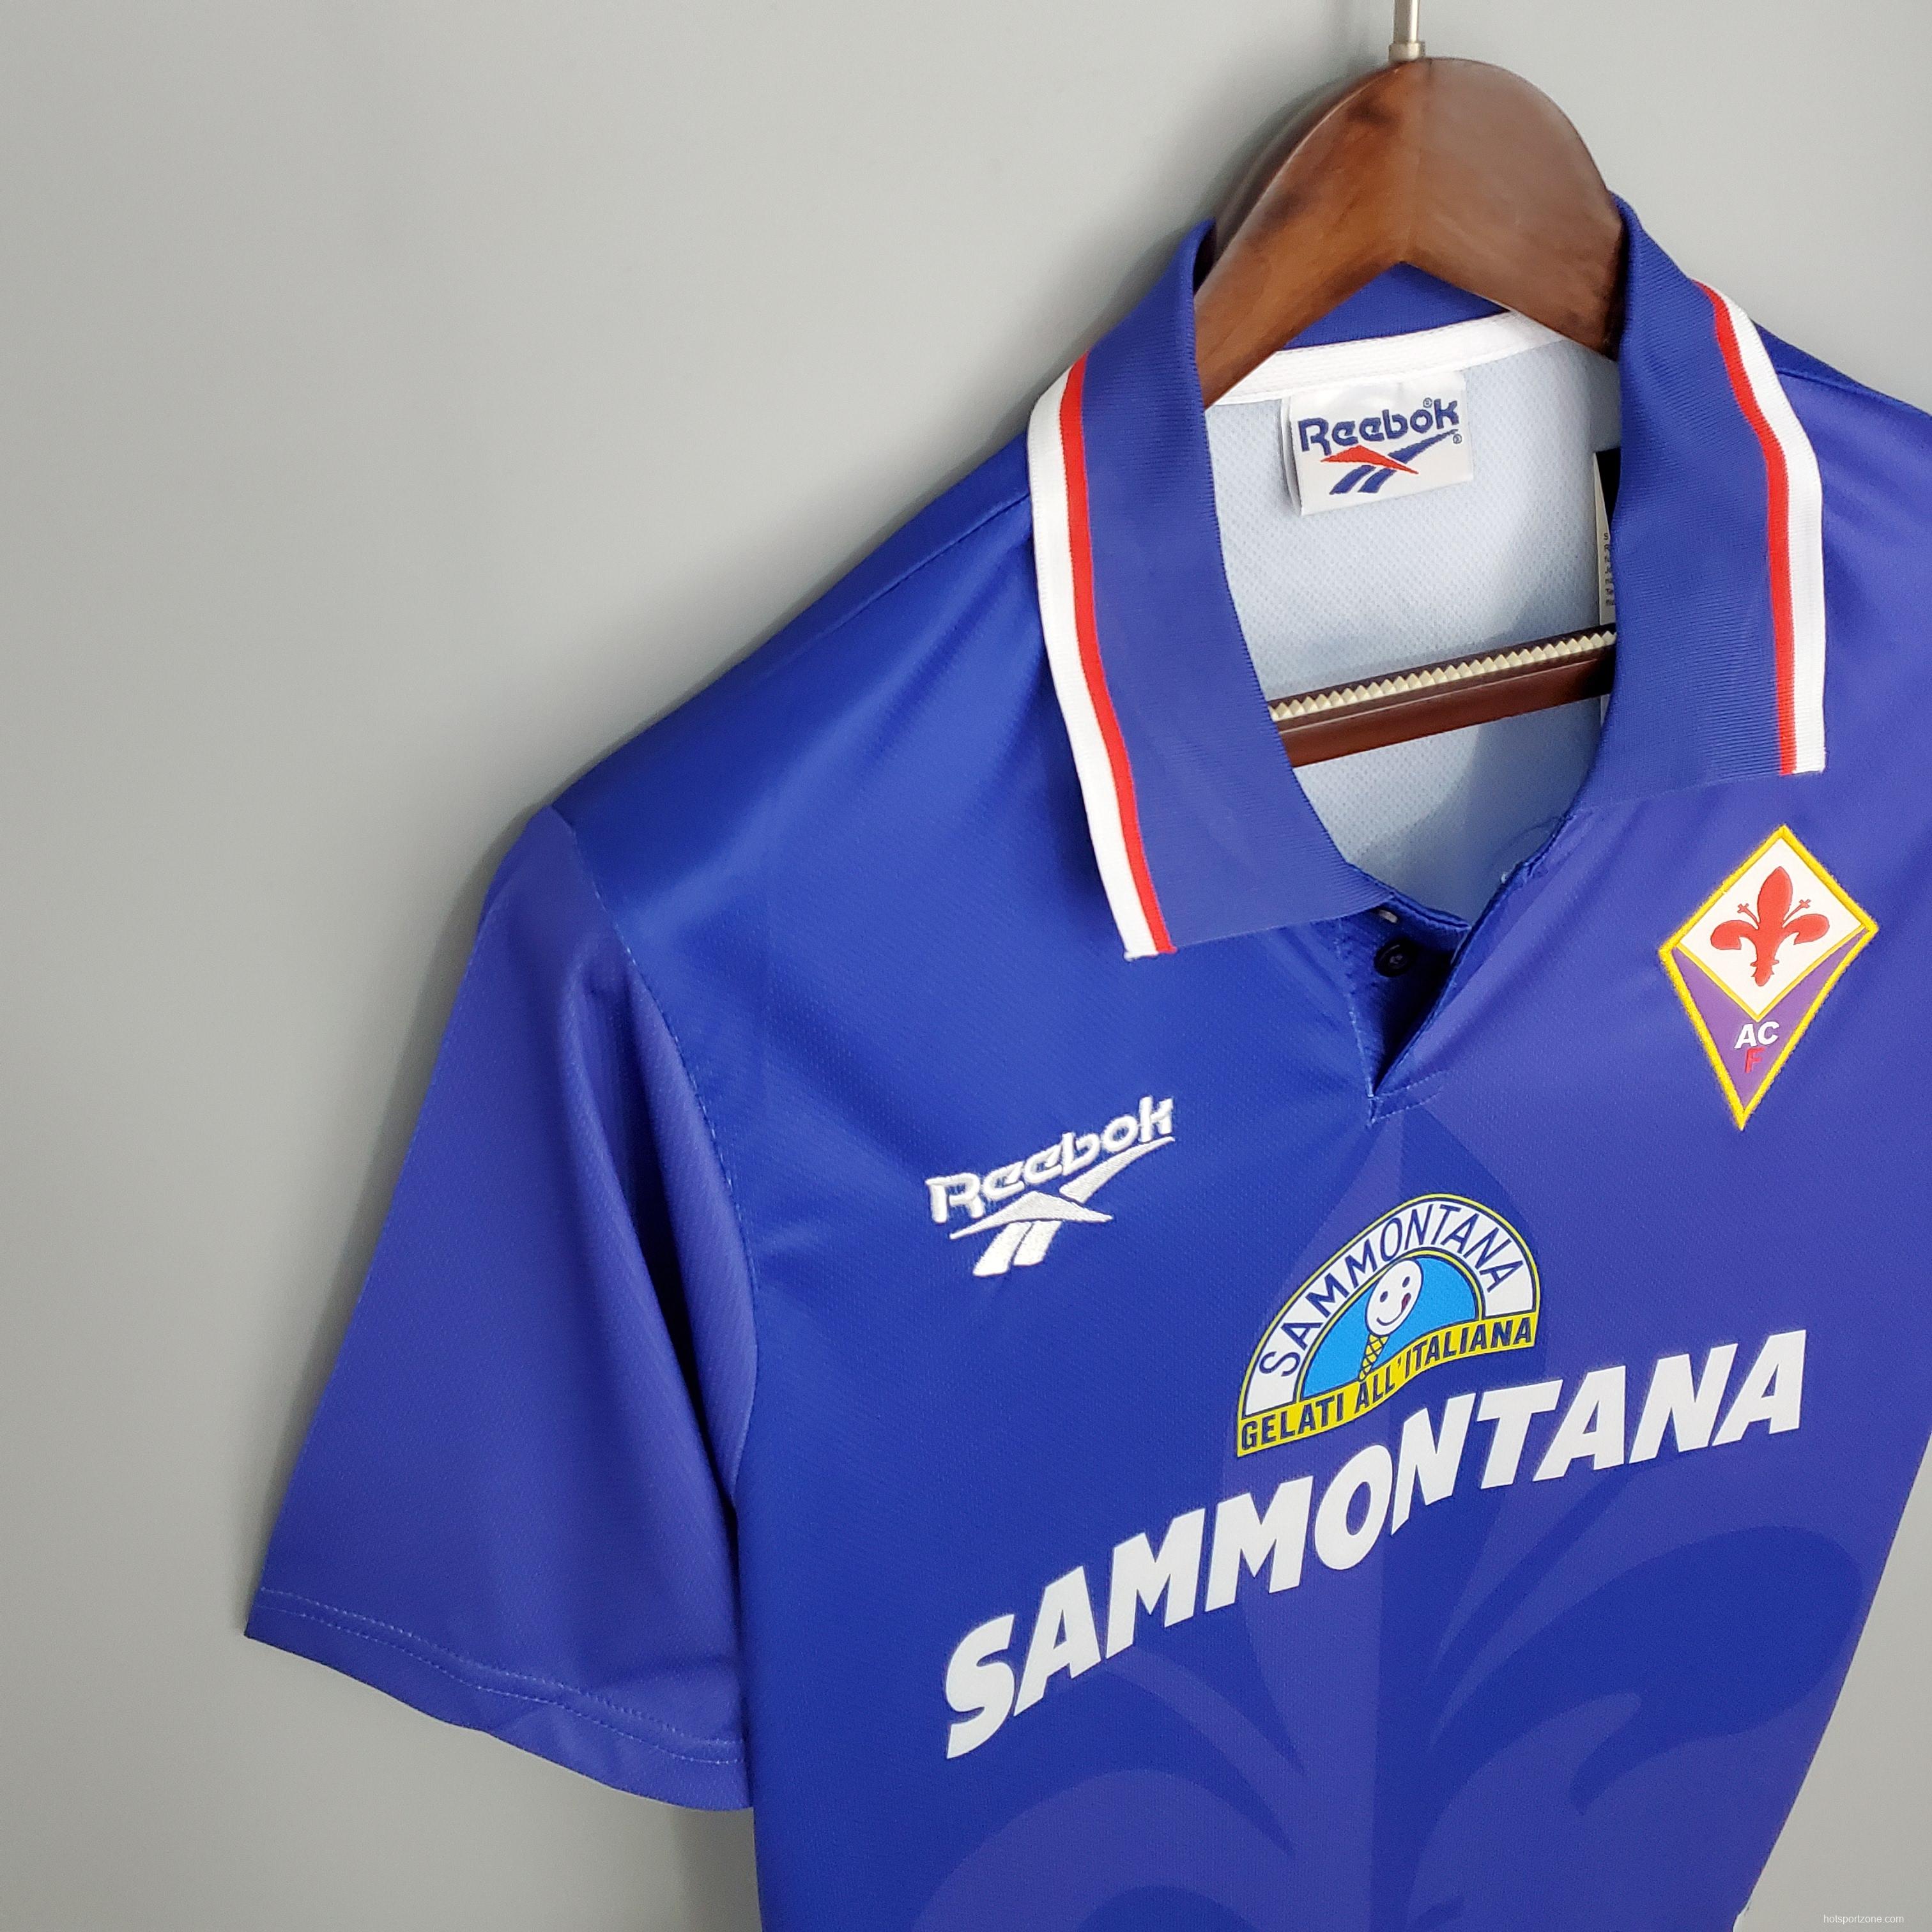 Retro Fiorentina 95/96 home Soccer Jersey